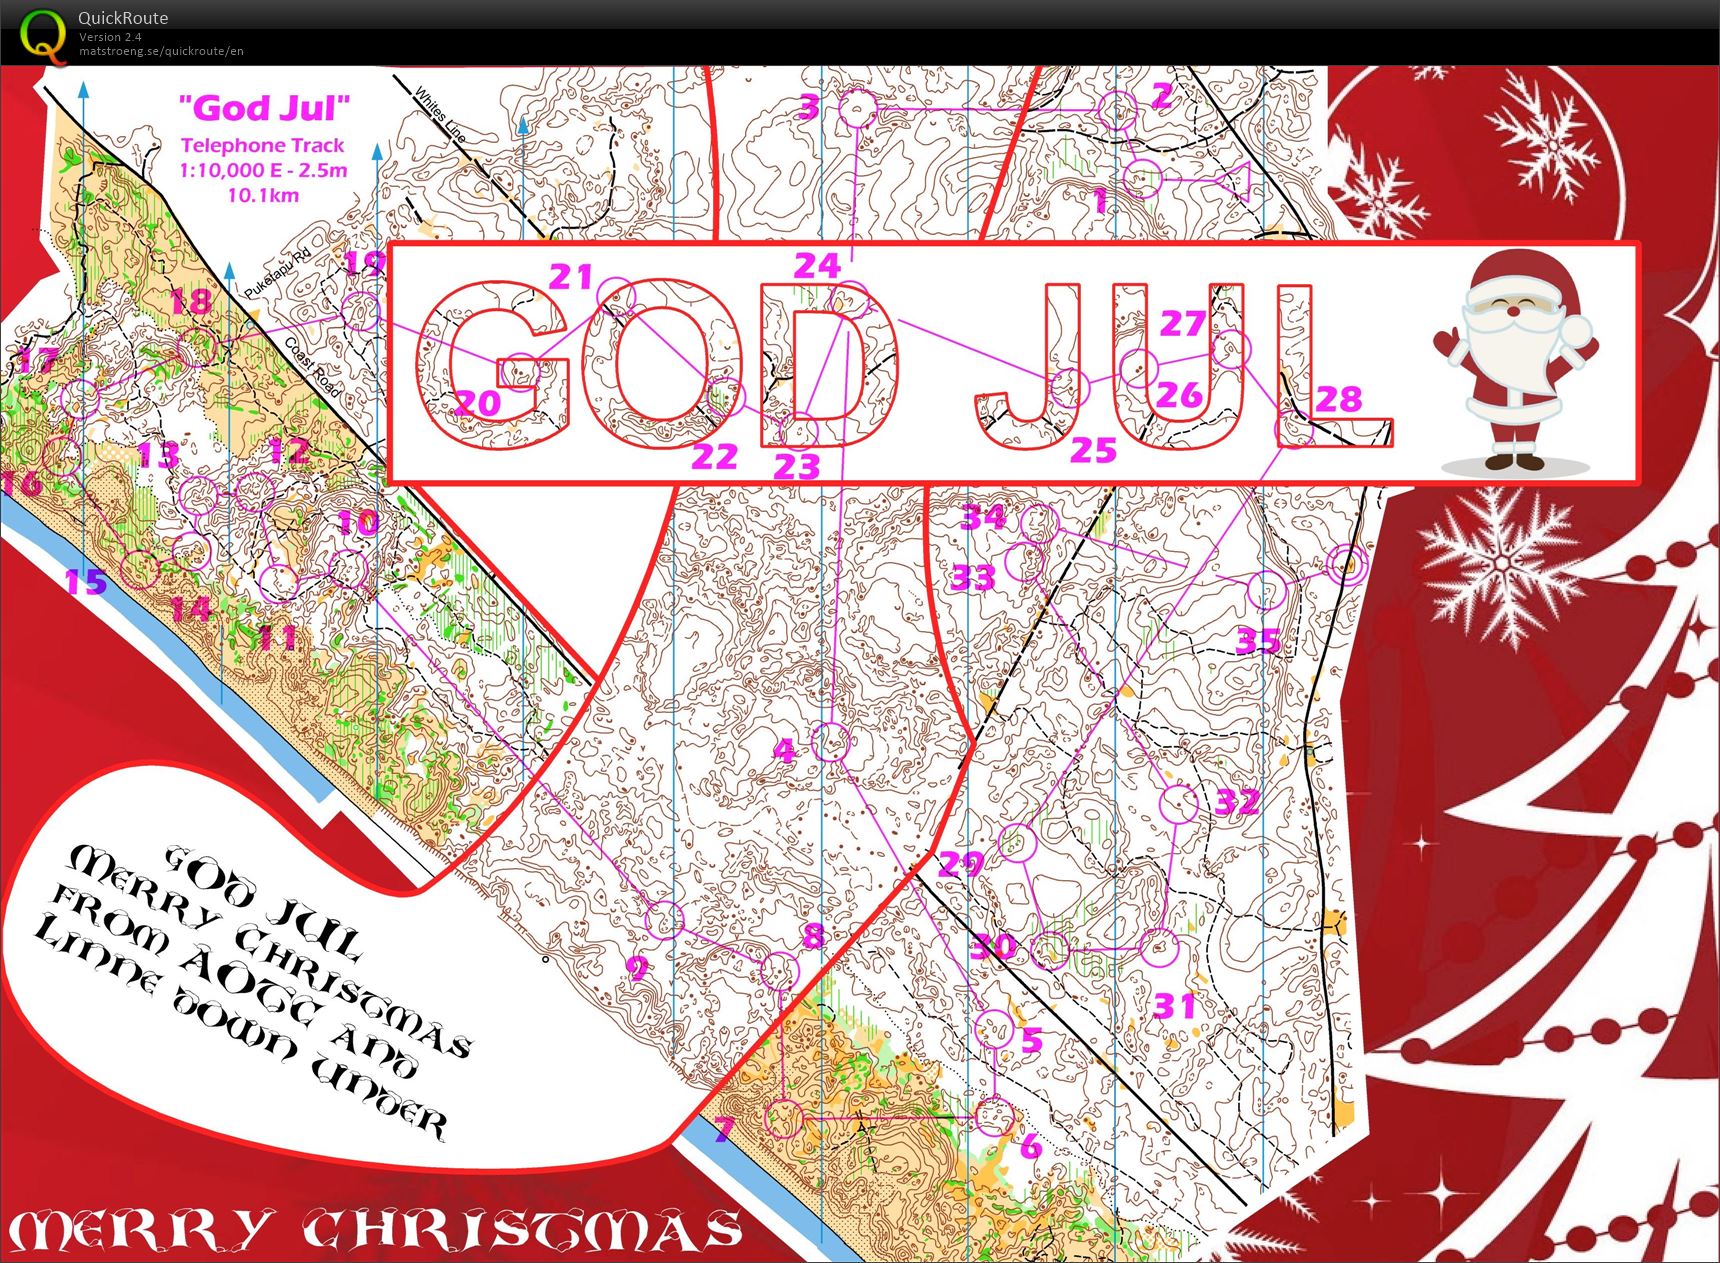 God Jul - Christmas Eve Training (24-12-2014)